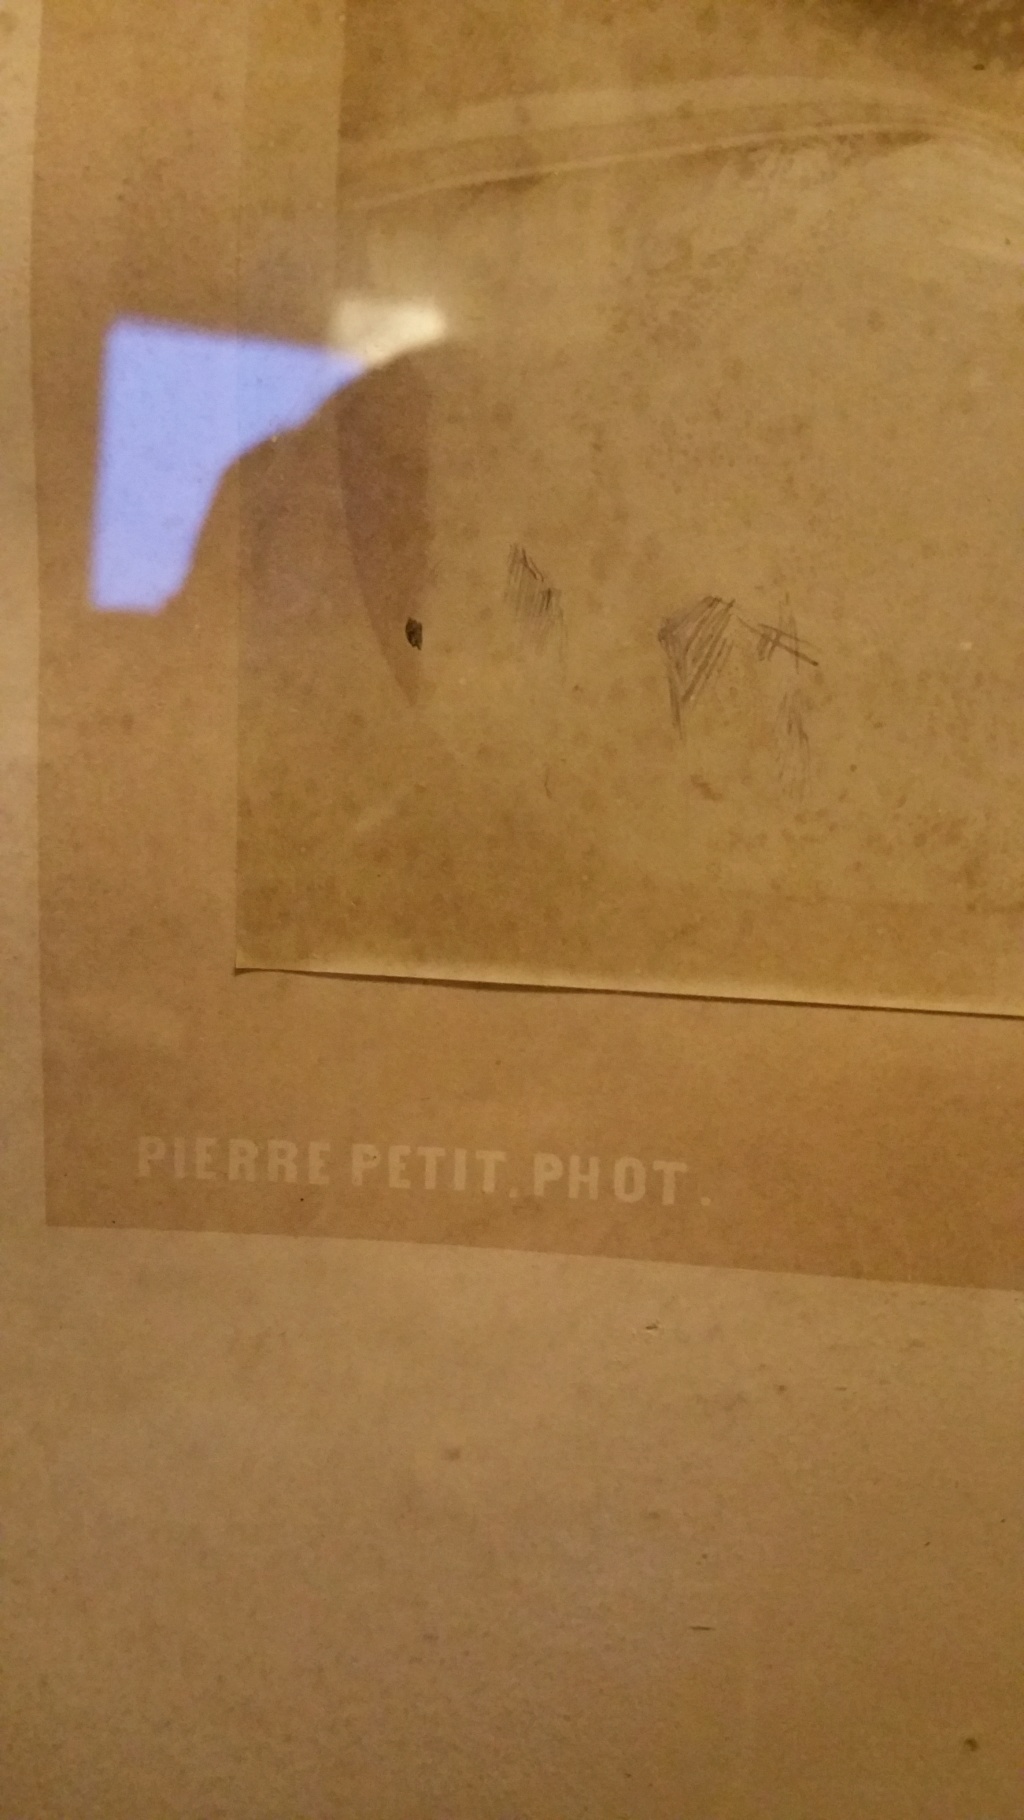 Pierre Petit 20200223